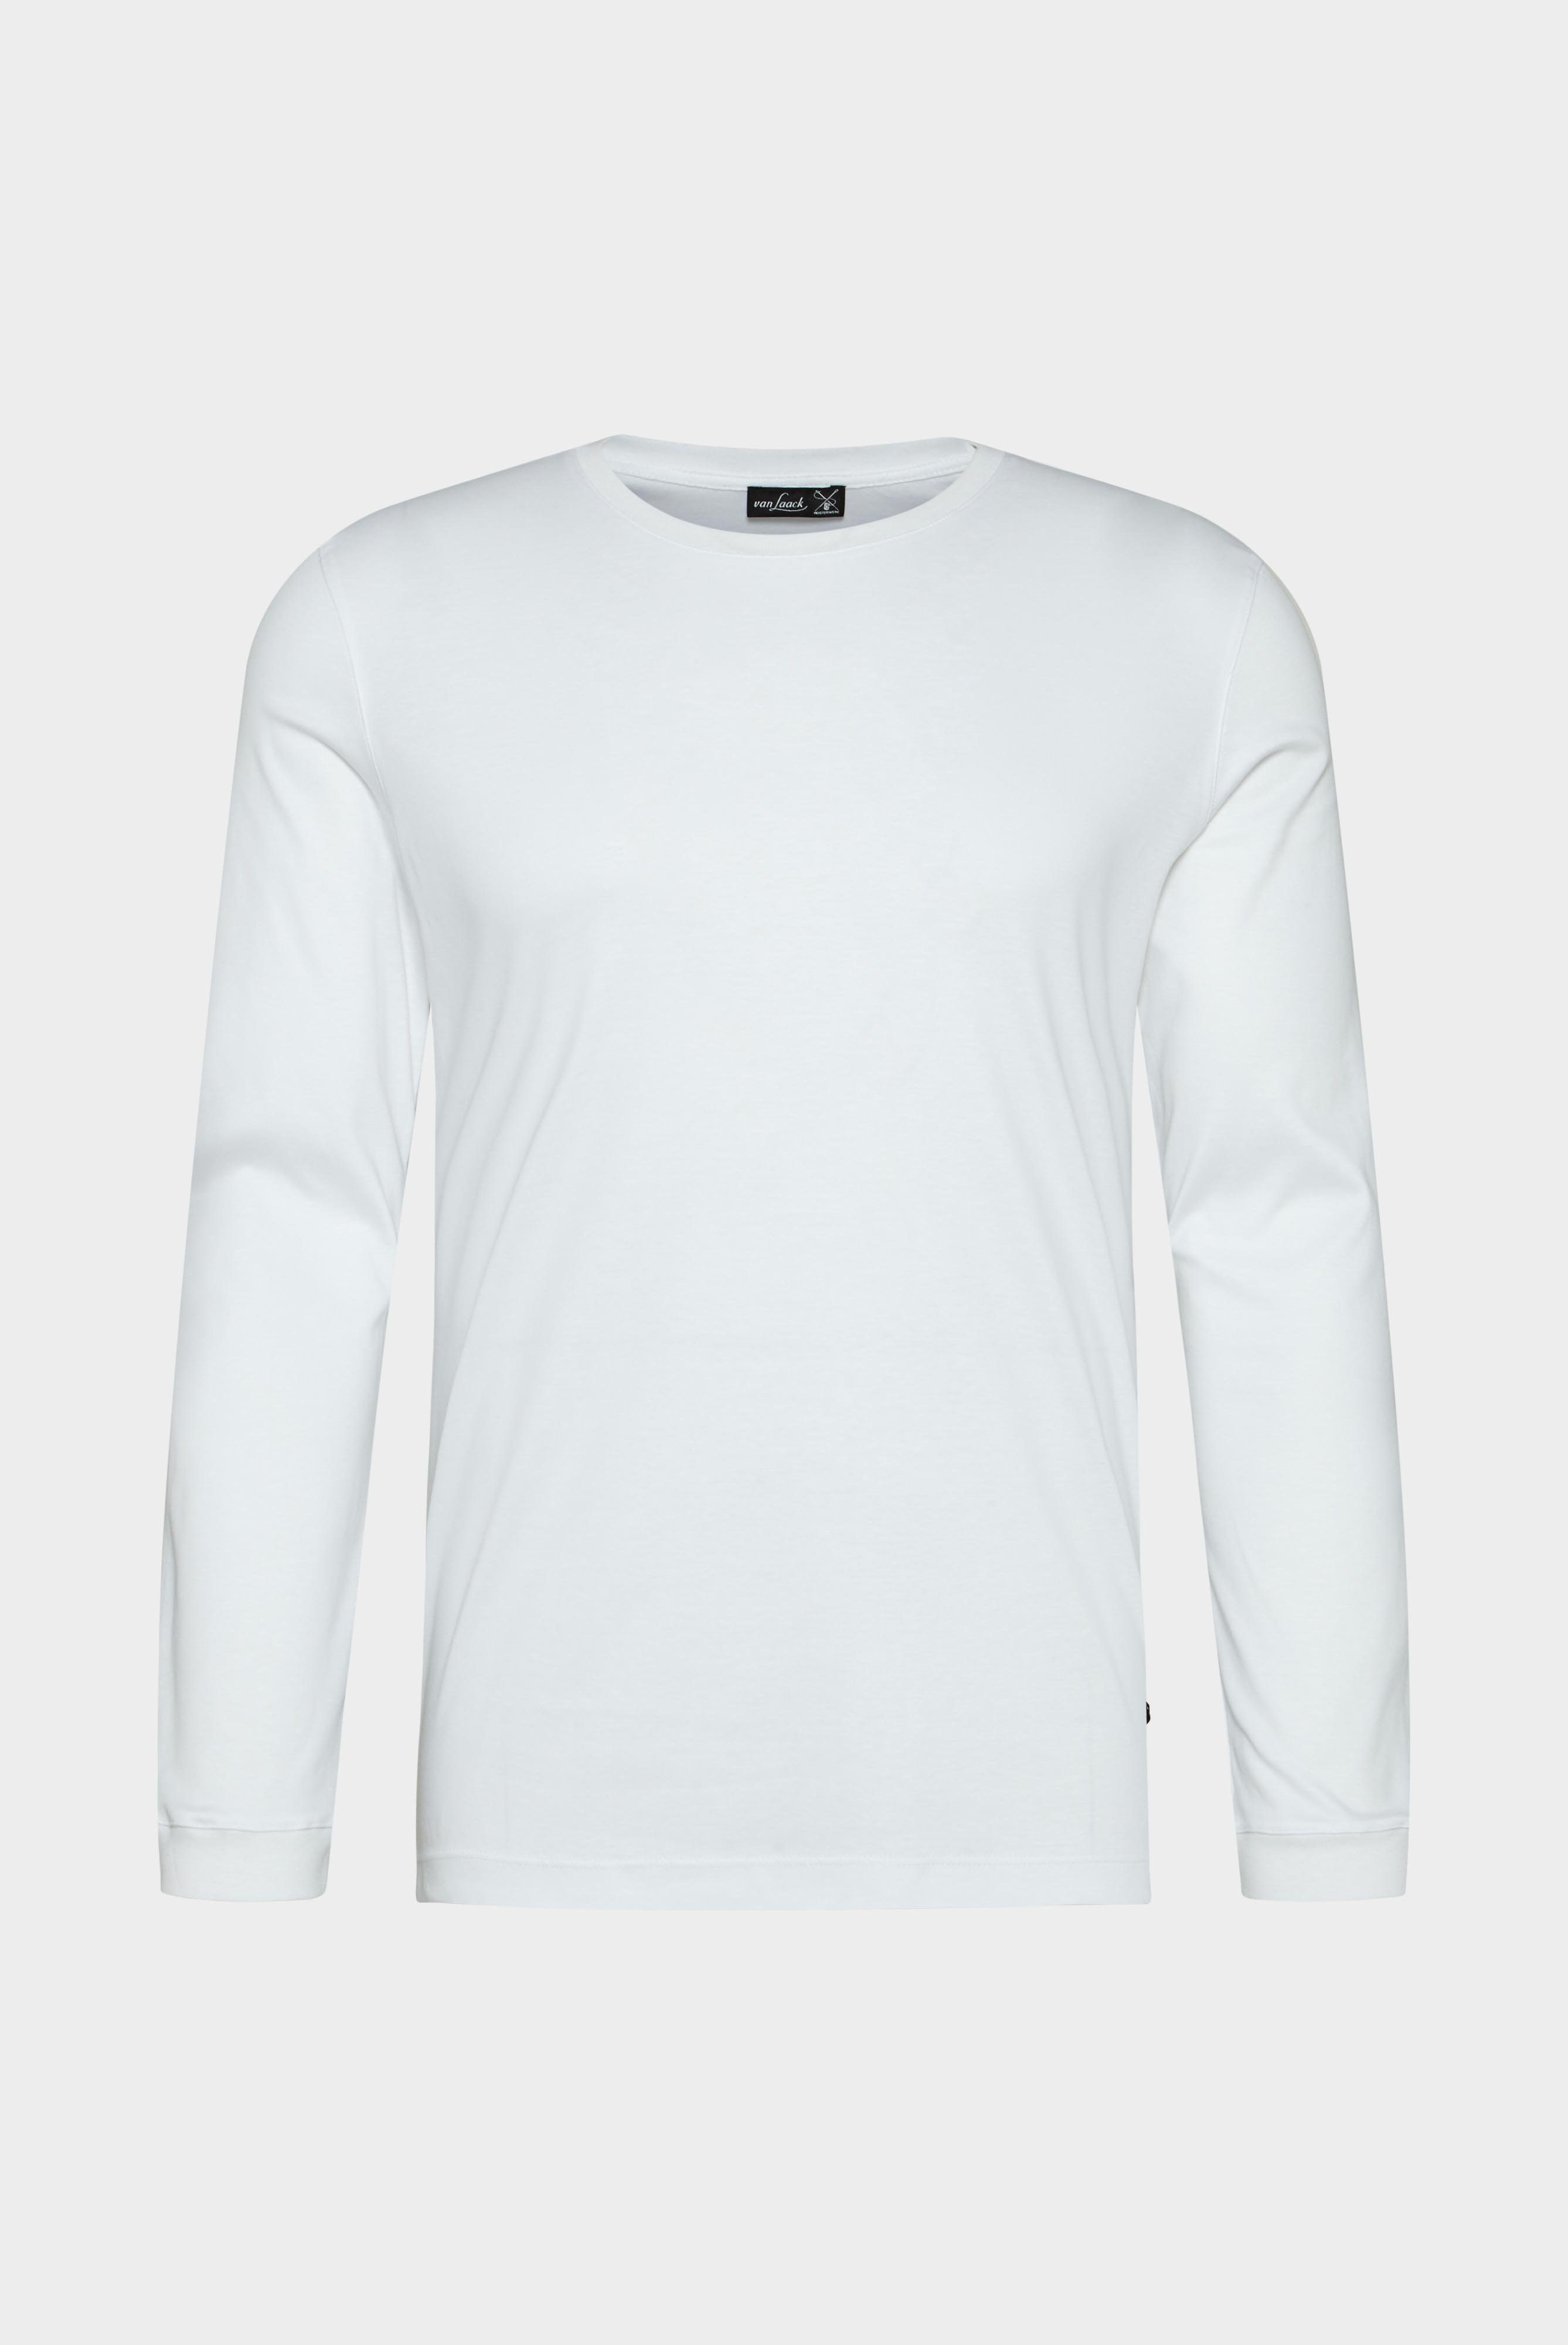 T-Shirts+Longsleeve Swiss Cotton Jersey Crew Neck T-Shirt+20.1718.UX.180031.000.L